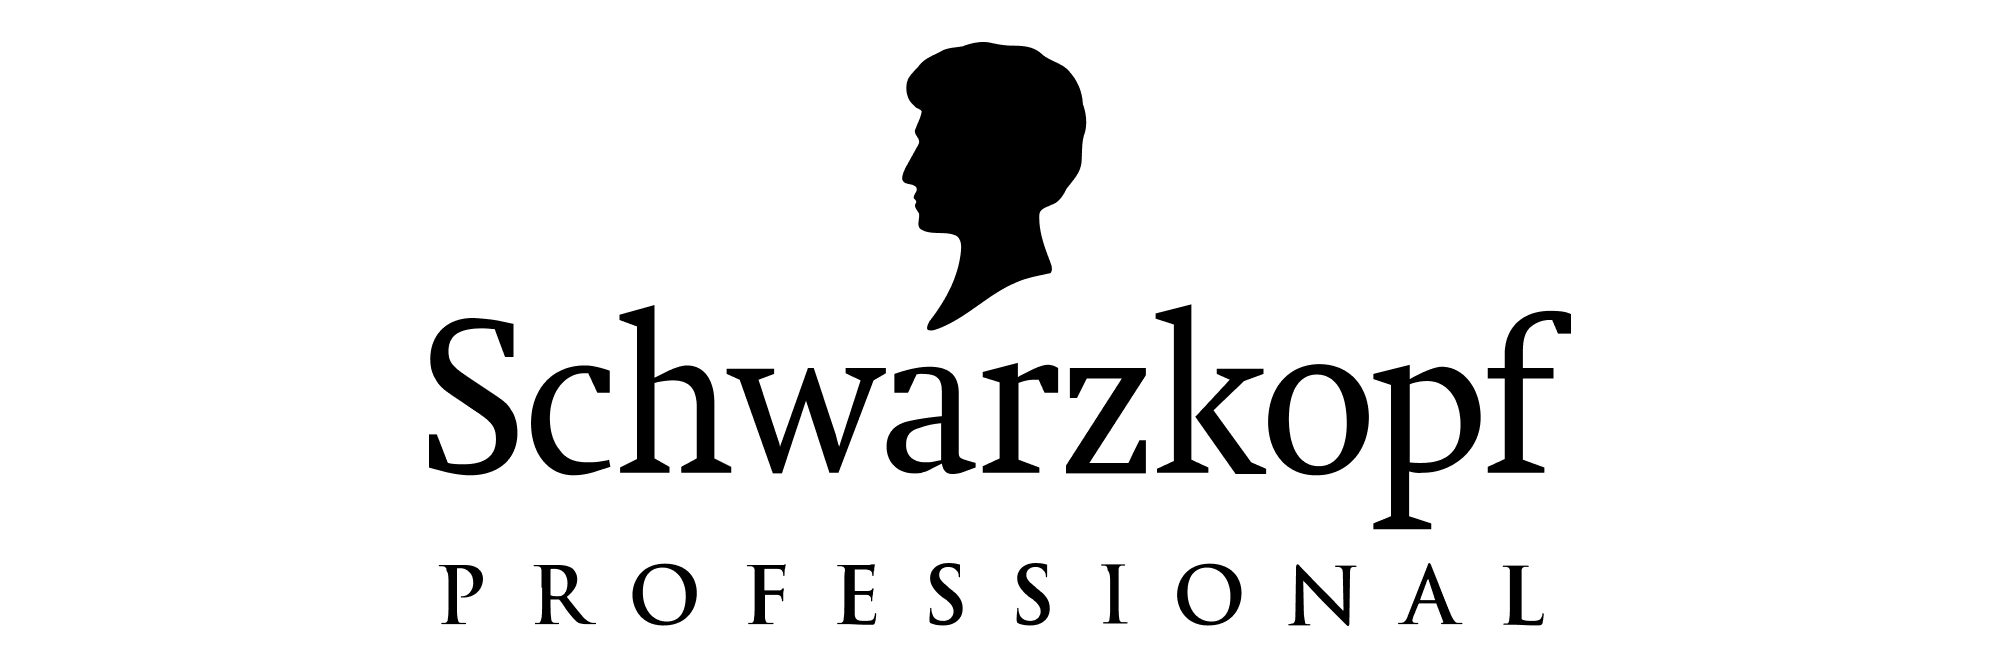 Schwarzkopf professional